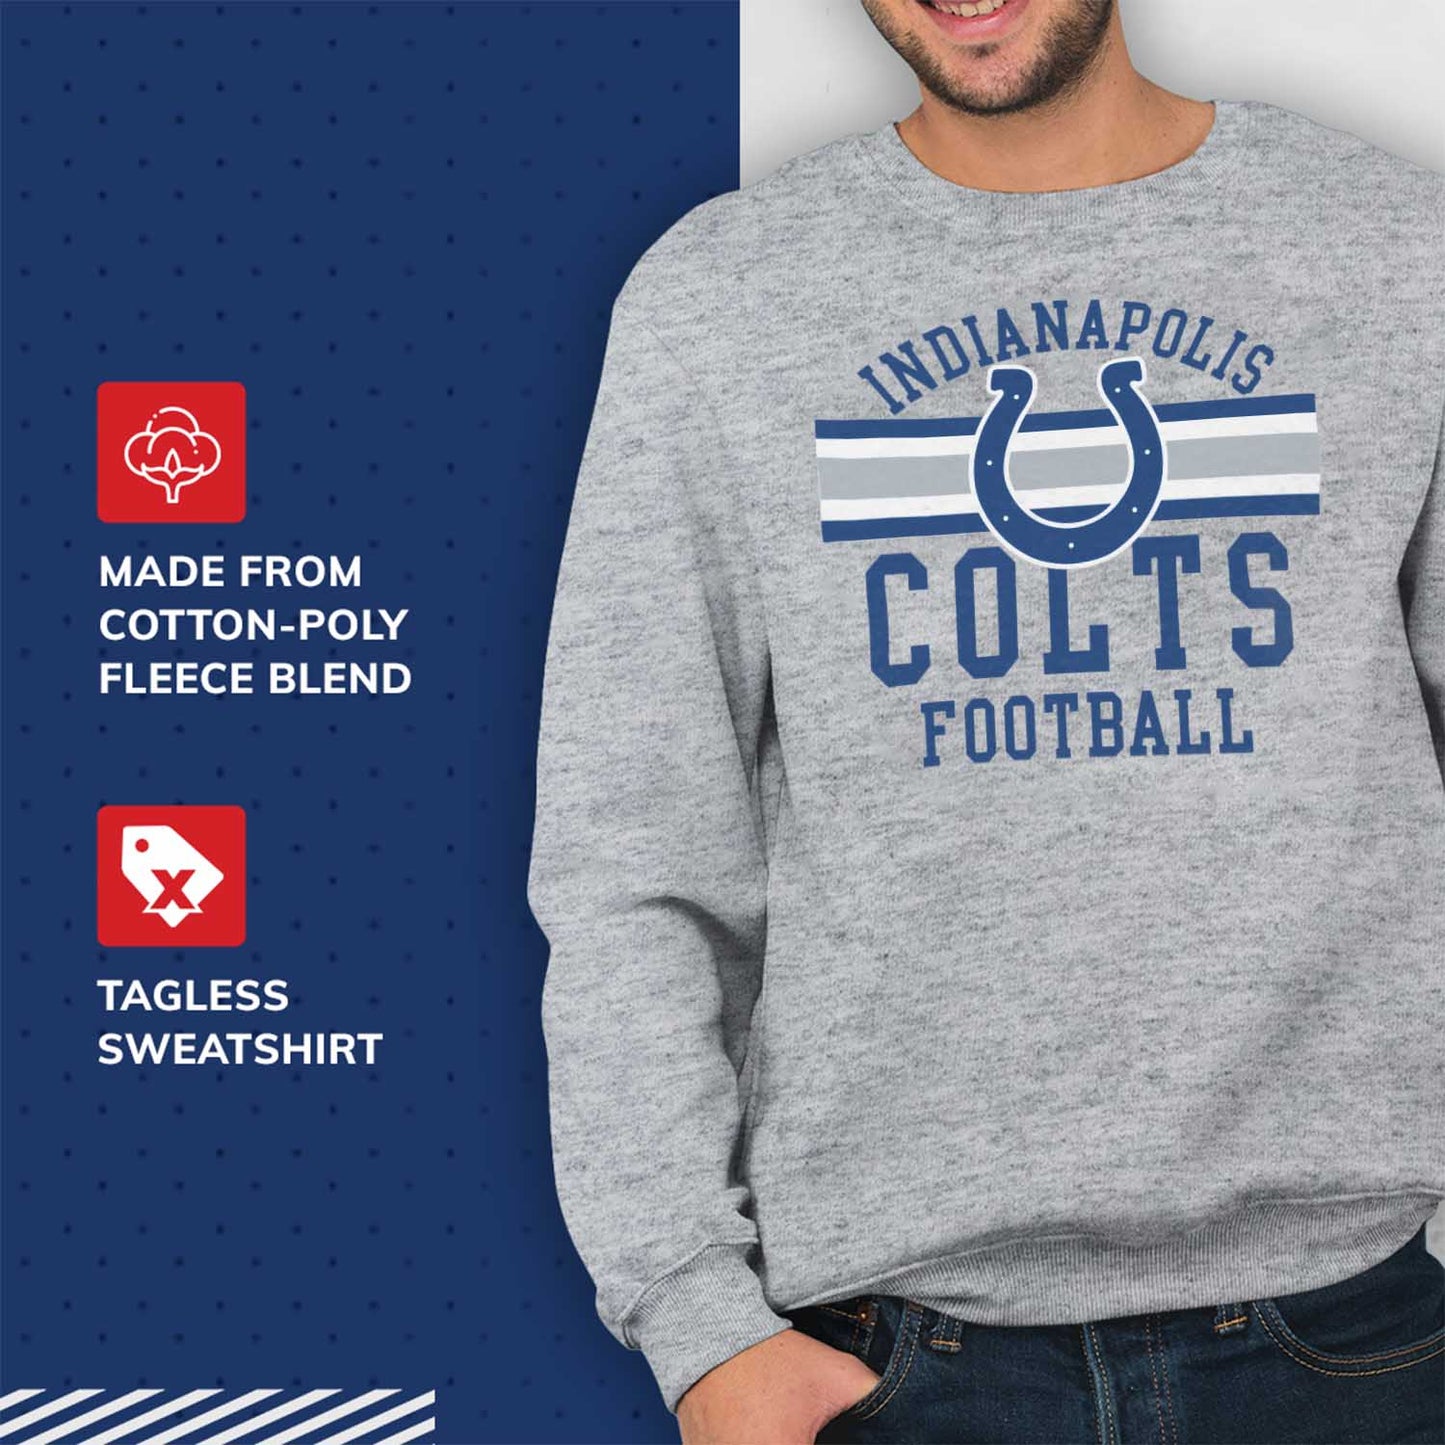 Indianapolis Colts NFL Team Stripe Crew Sweatshirt - Sport Gray